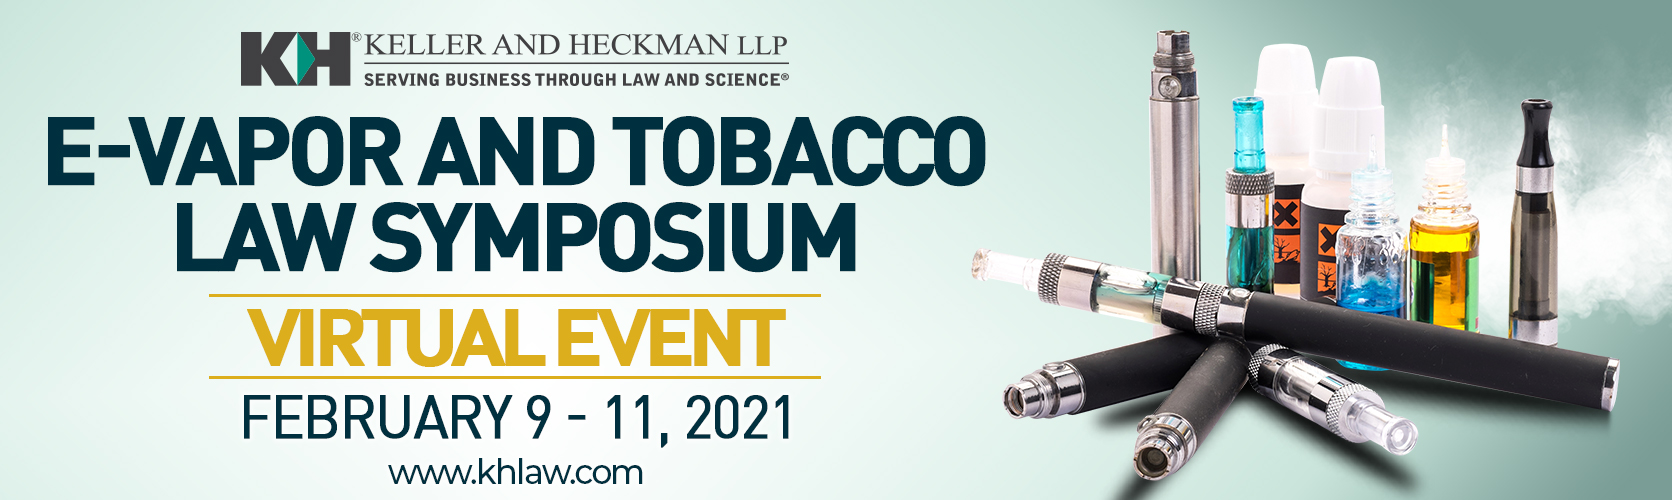 E-Vapor and Tobacco Law Symposium Banner Vape Materials